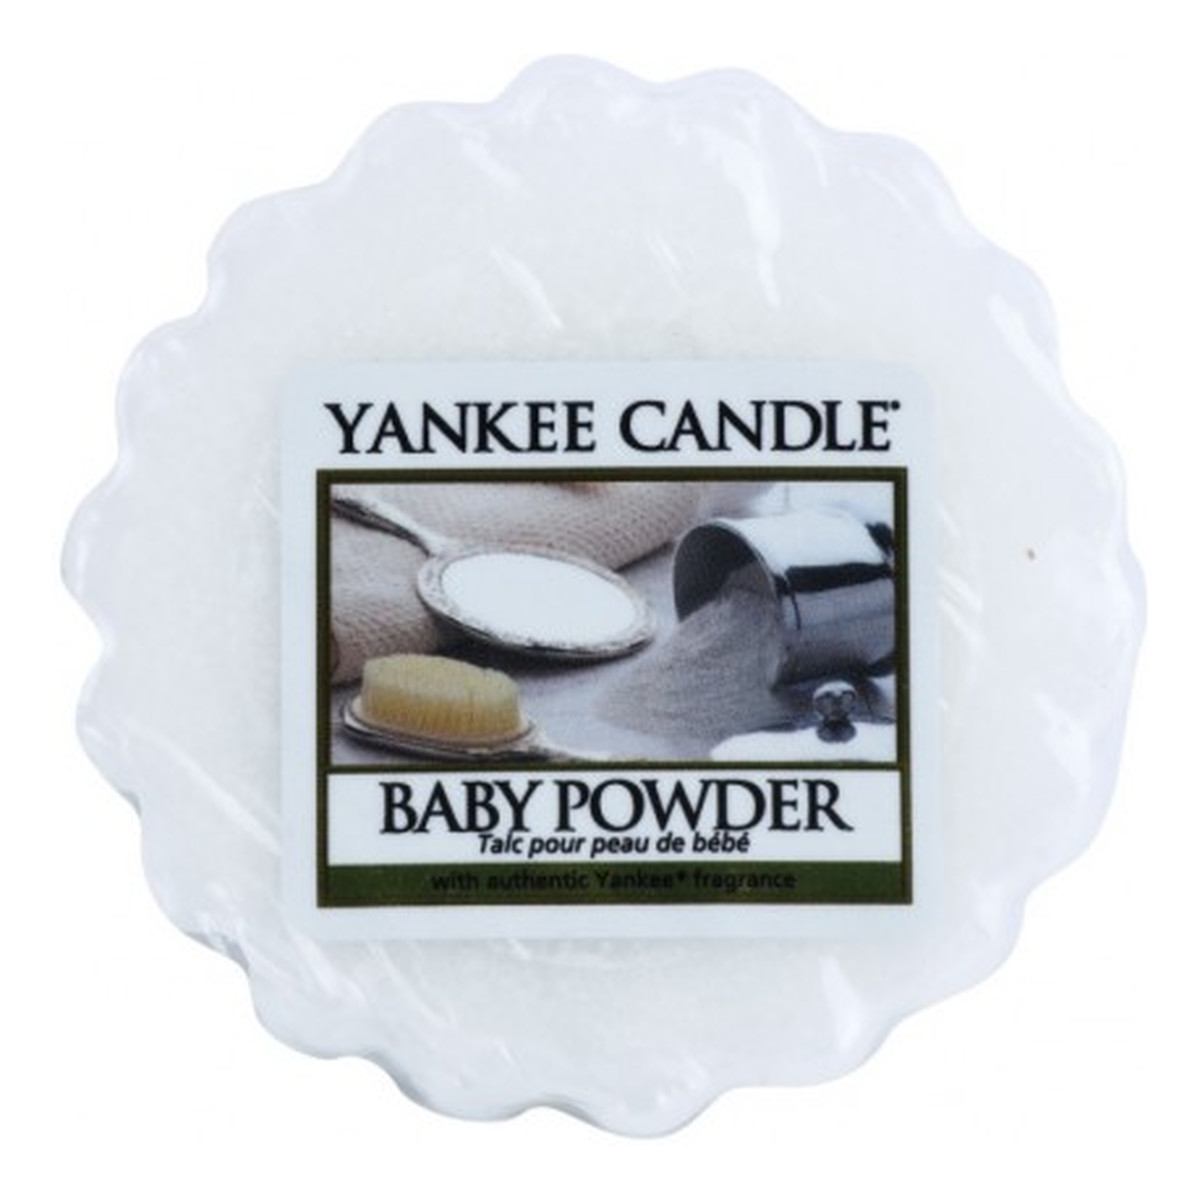 Yankee Candle Wax wosk zapachowy Baby Powder 22g